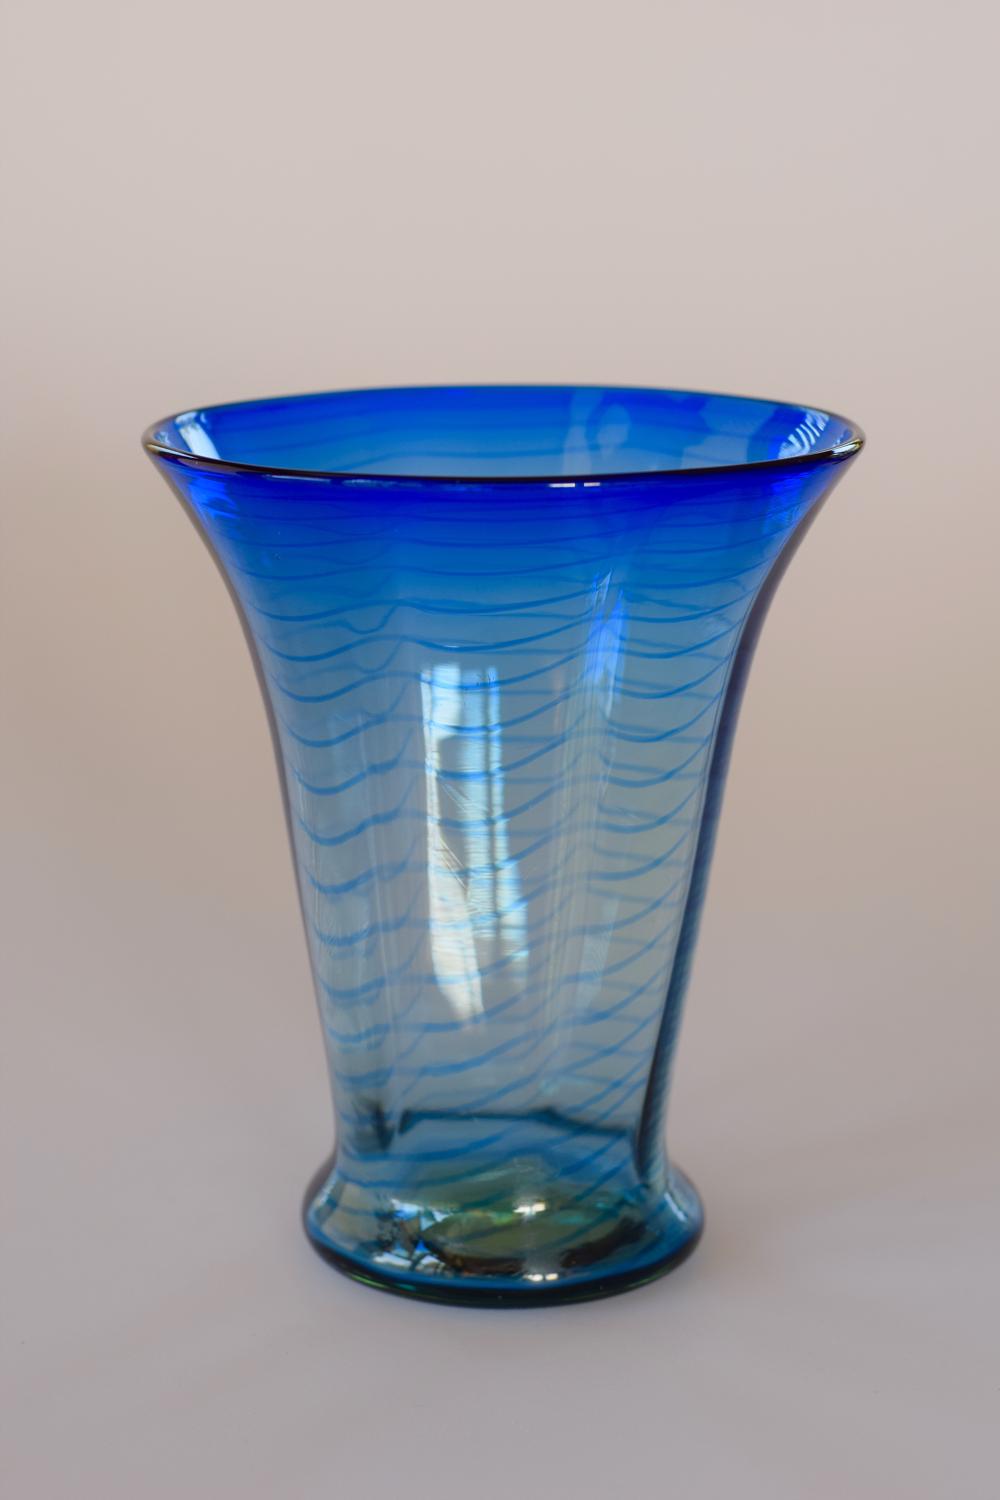 Small blue threaded Whitefrairs vase.